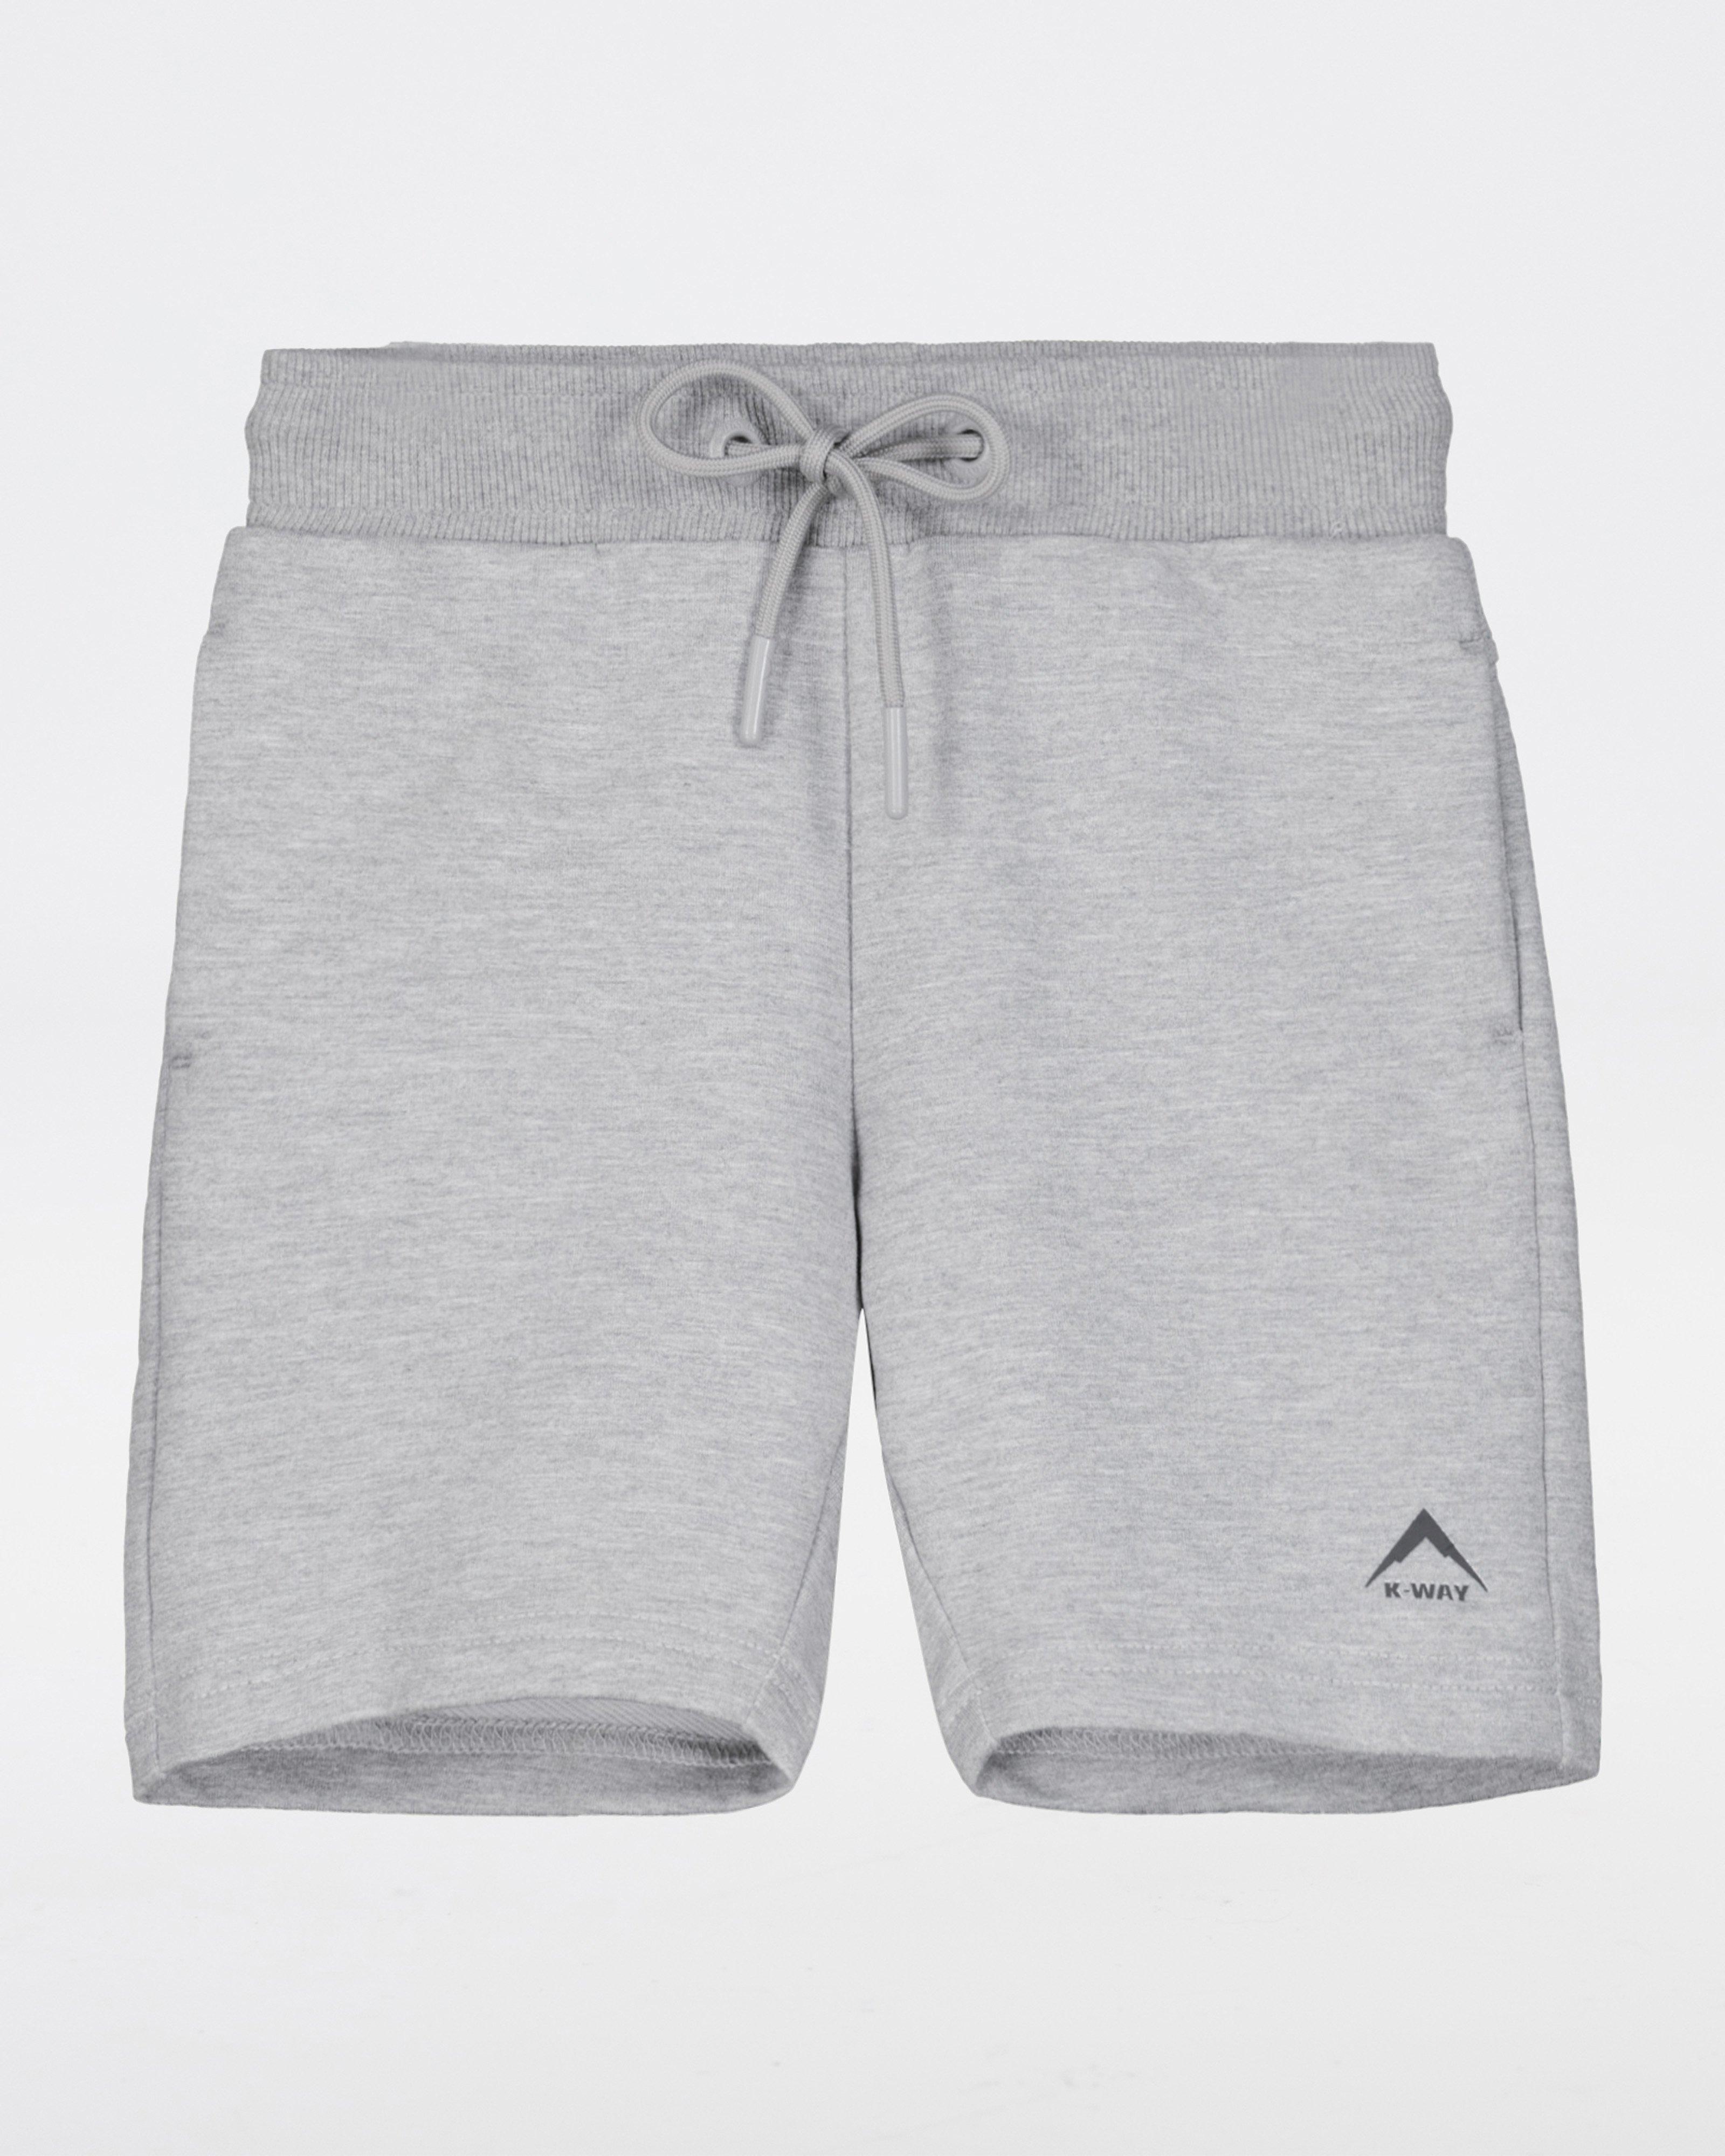 K-Way Kids Boys’ Tech Fleece Shorts -  Grey